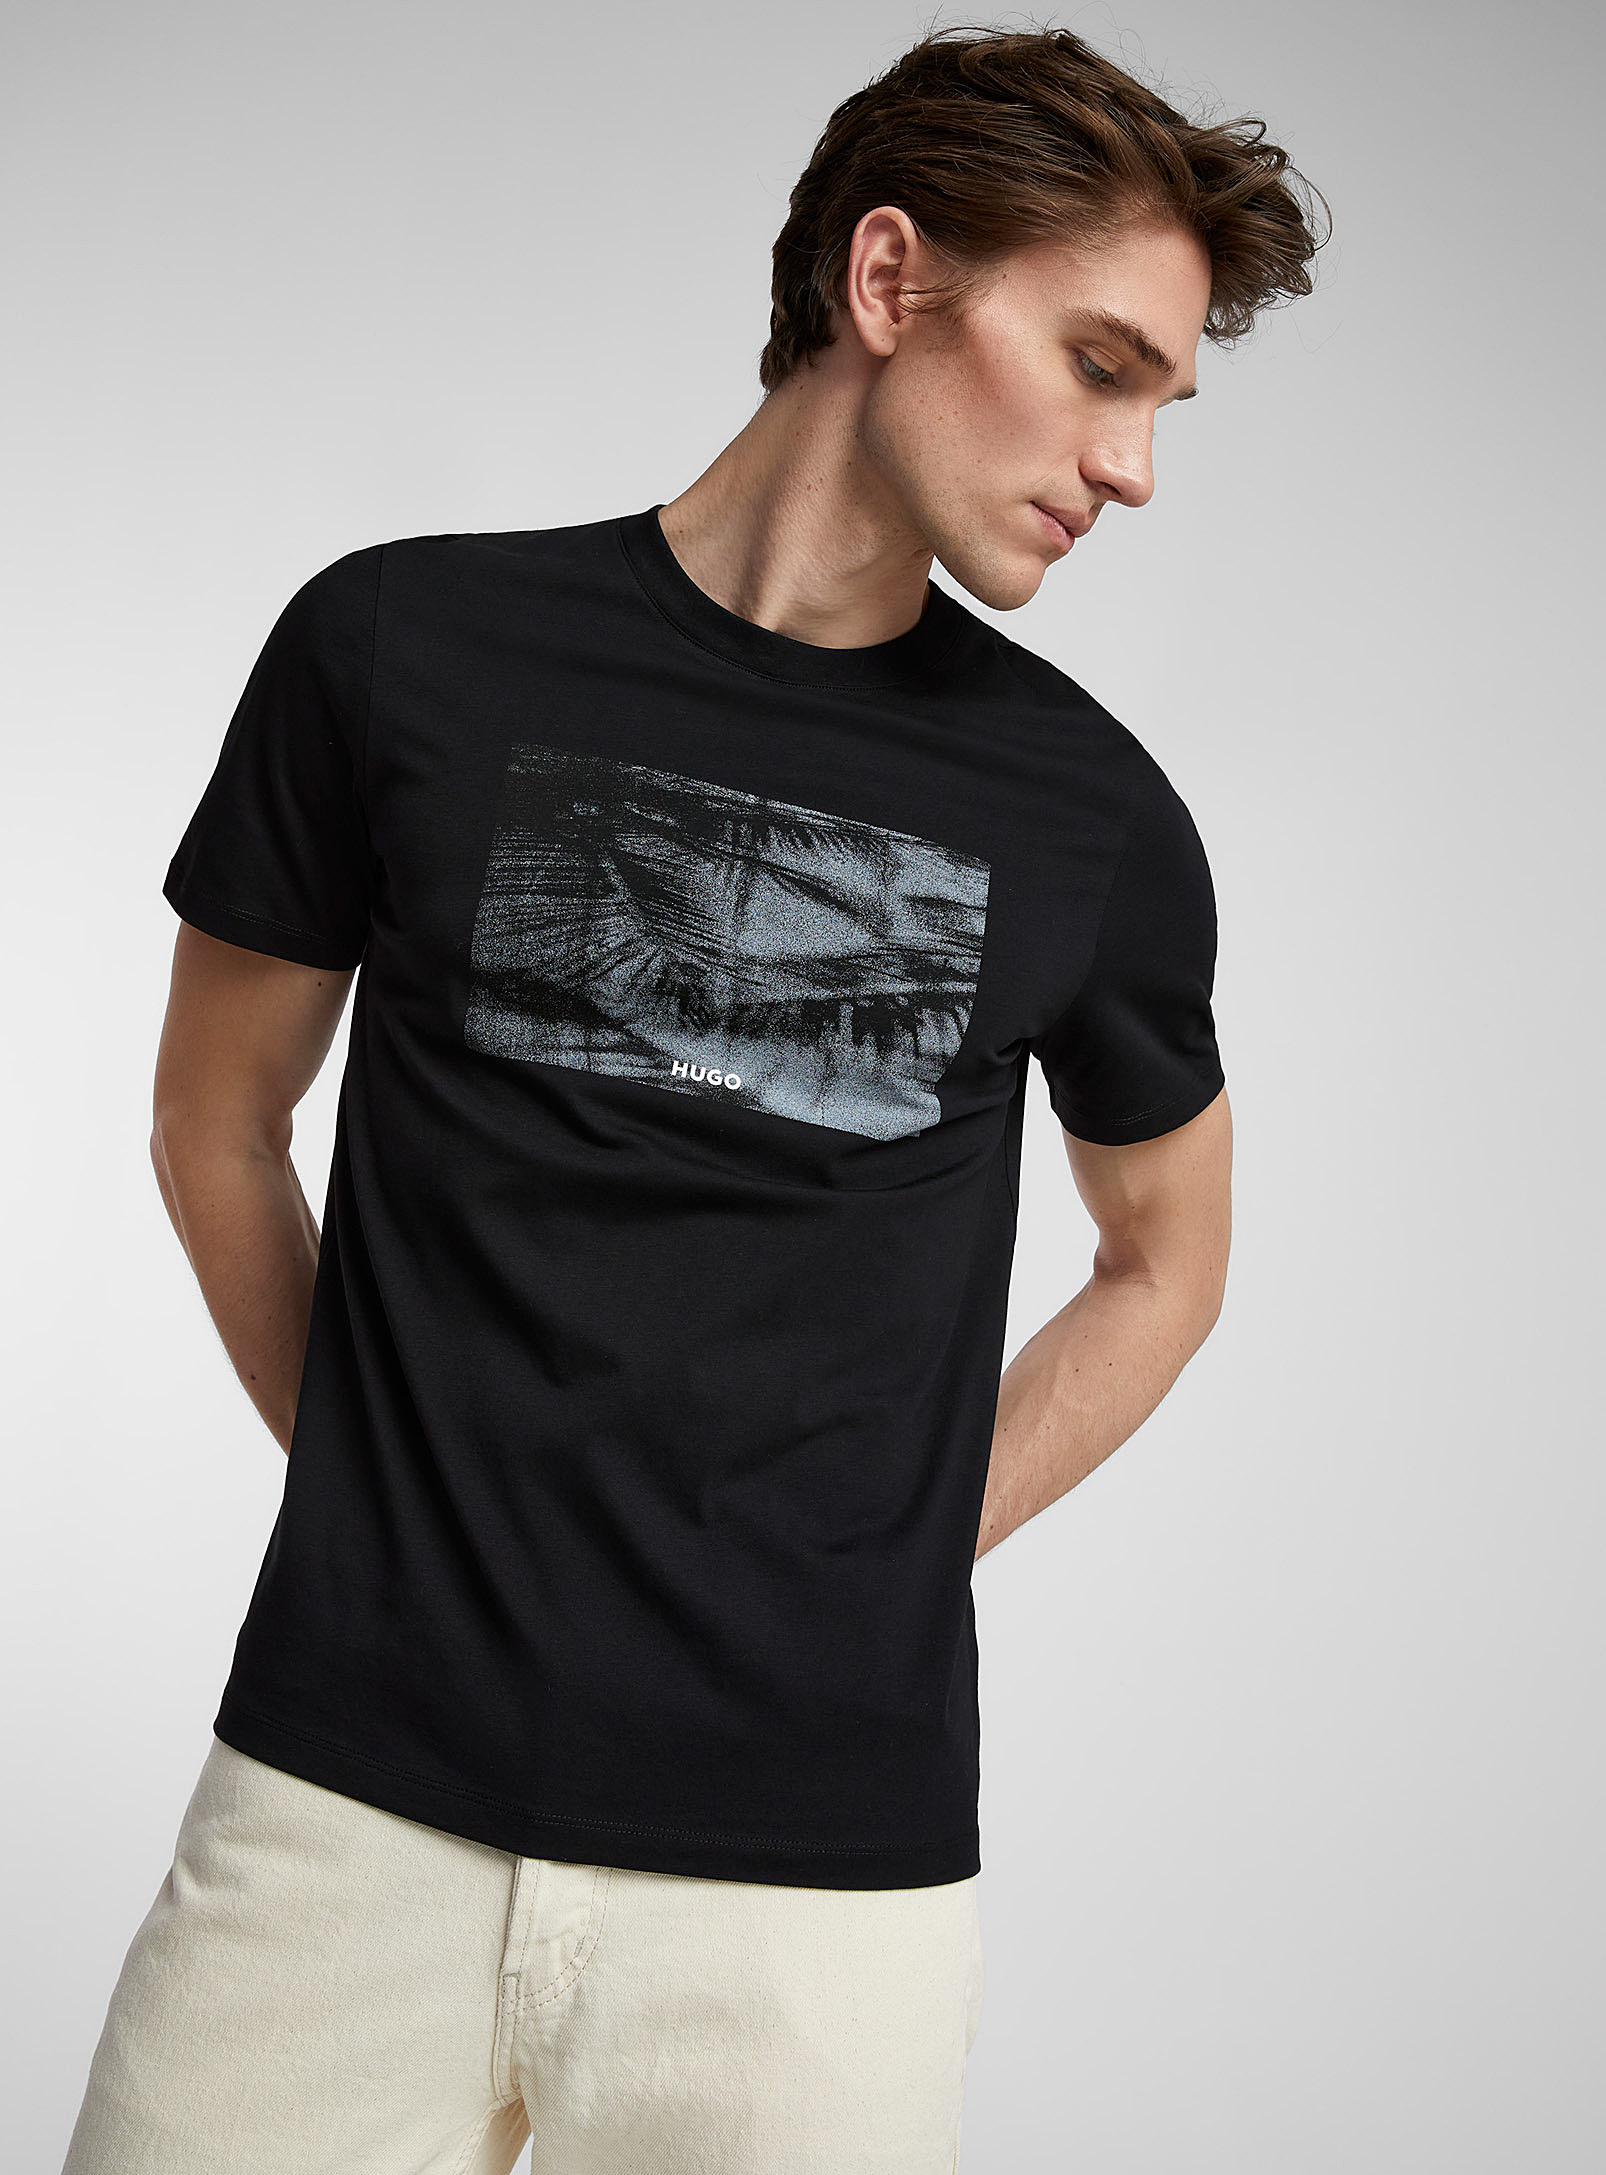 HUGO - Men's Tropical silhouette monochrome T-shirt